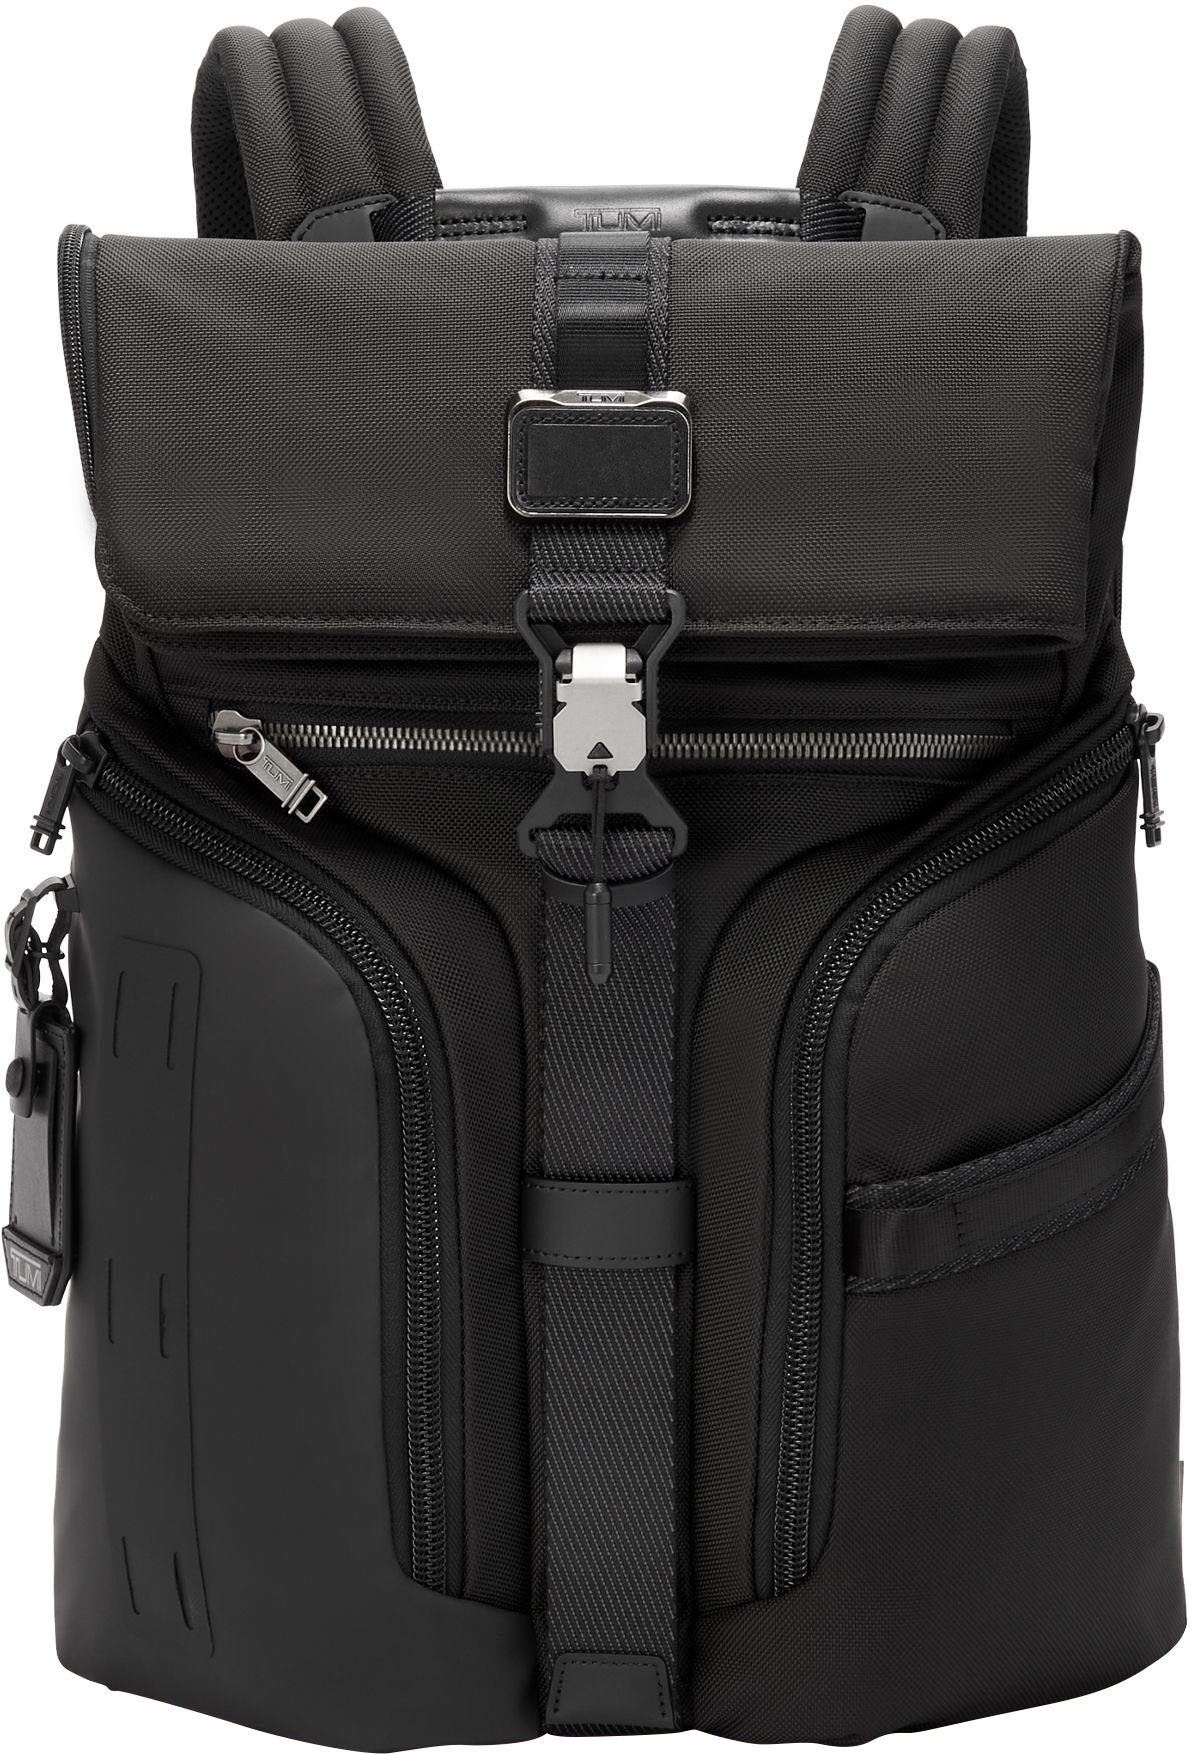 TUMI Alpha Bravo Logistics Flap Lid Backpack Black 142481-1041 - Best Buy